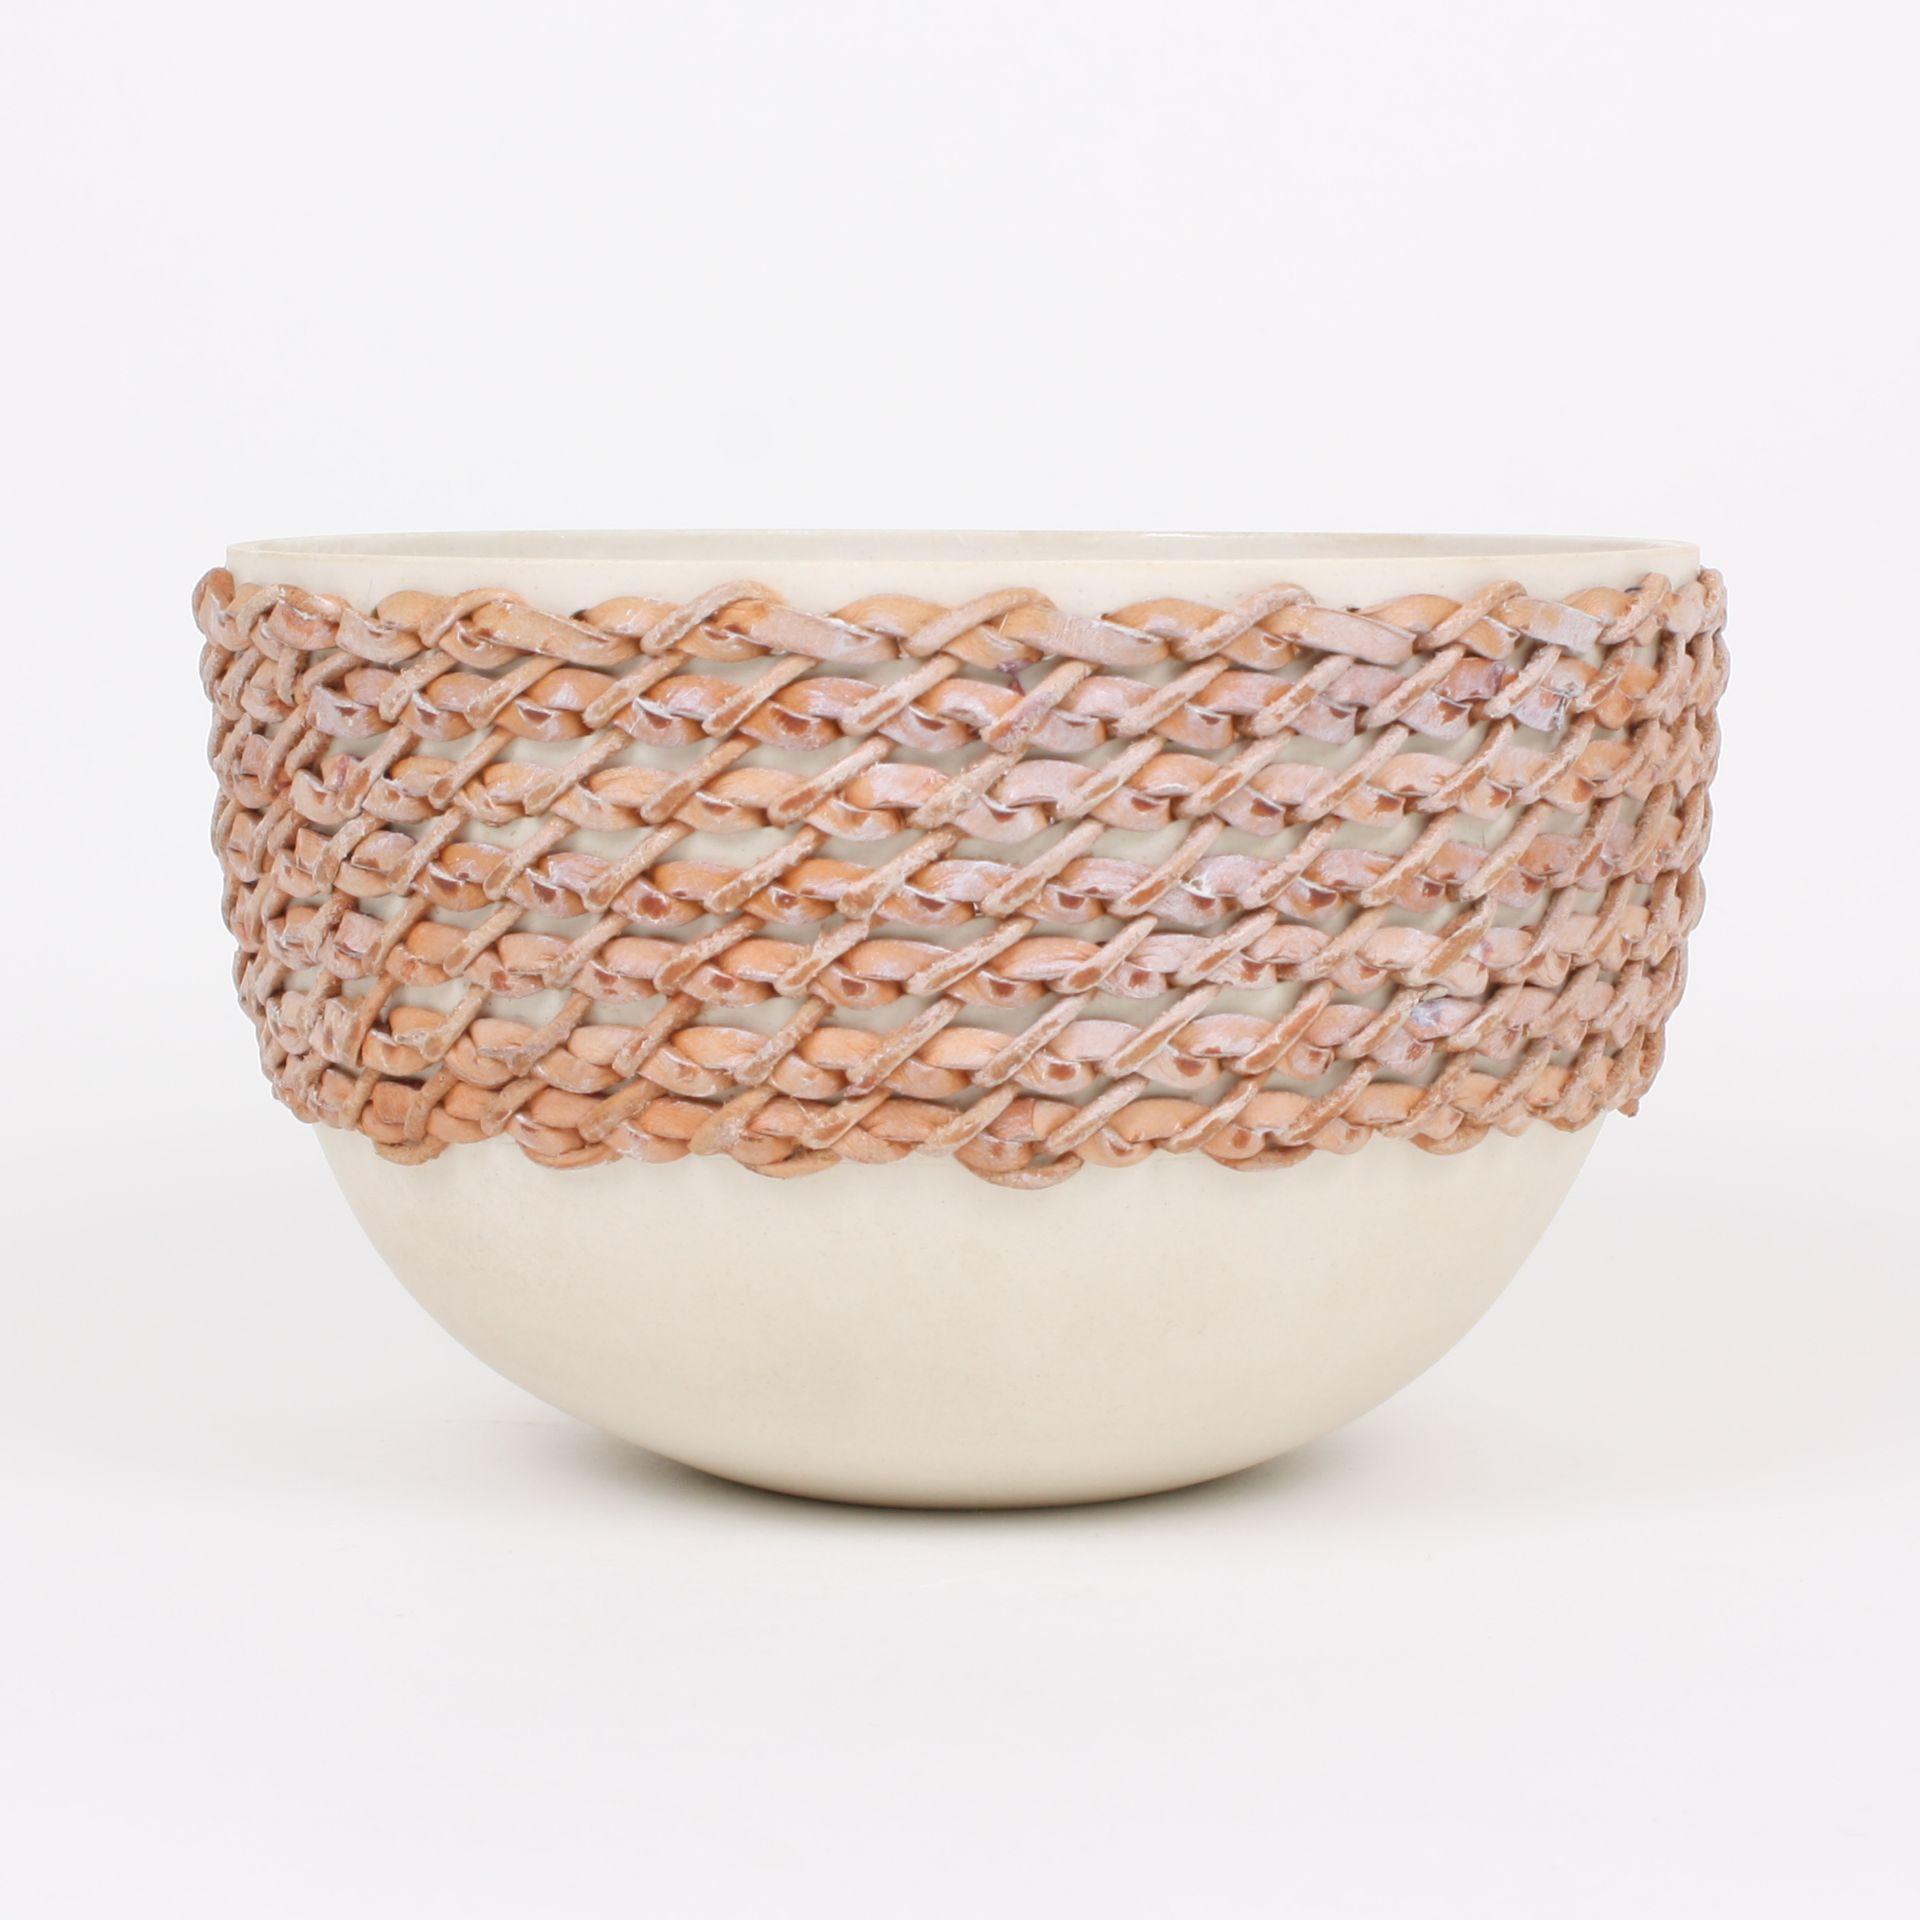 Embroidered Decorative Ceramic Bowl, Gladiateur #2 3